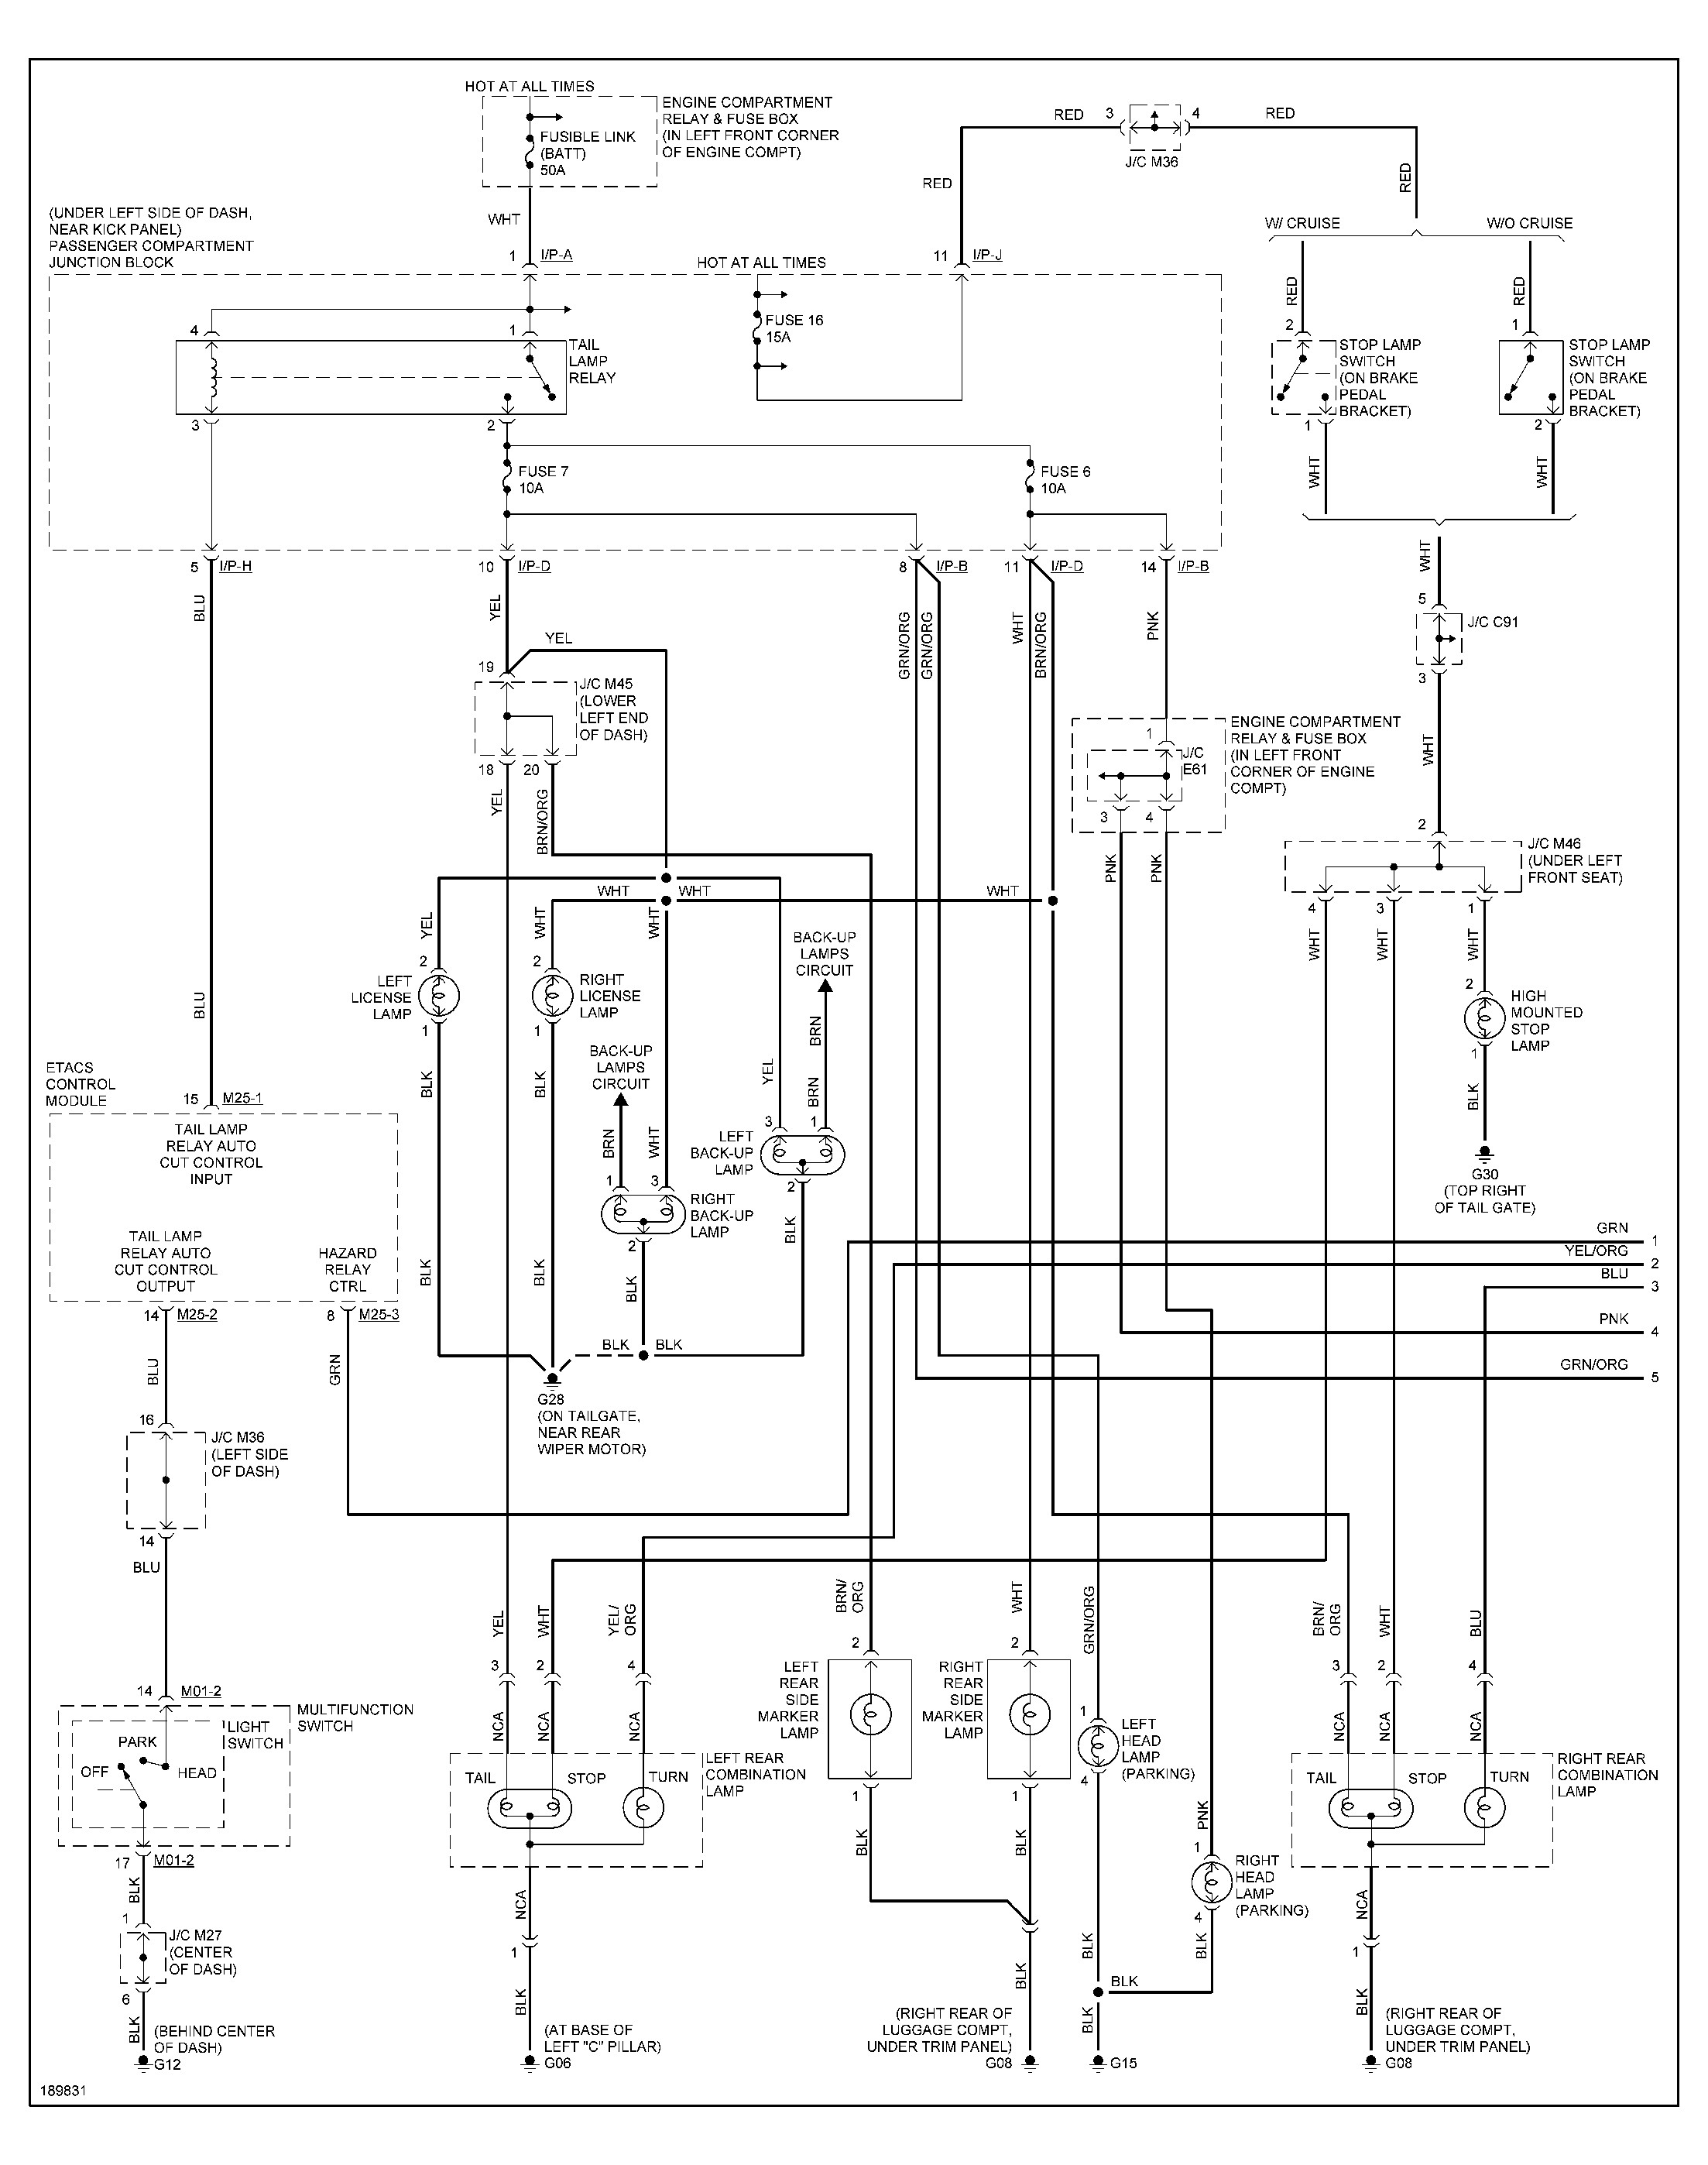 2005 Hyundai Elantra Engine Diagram 2005 Hyundai Elantra Wiring Diagram Of 2005 Hyundai Elantra Engine Diagram